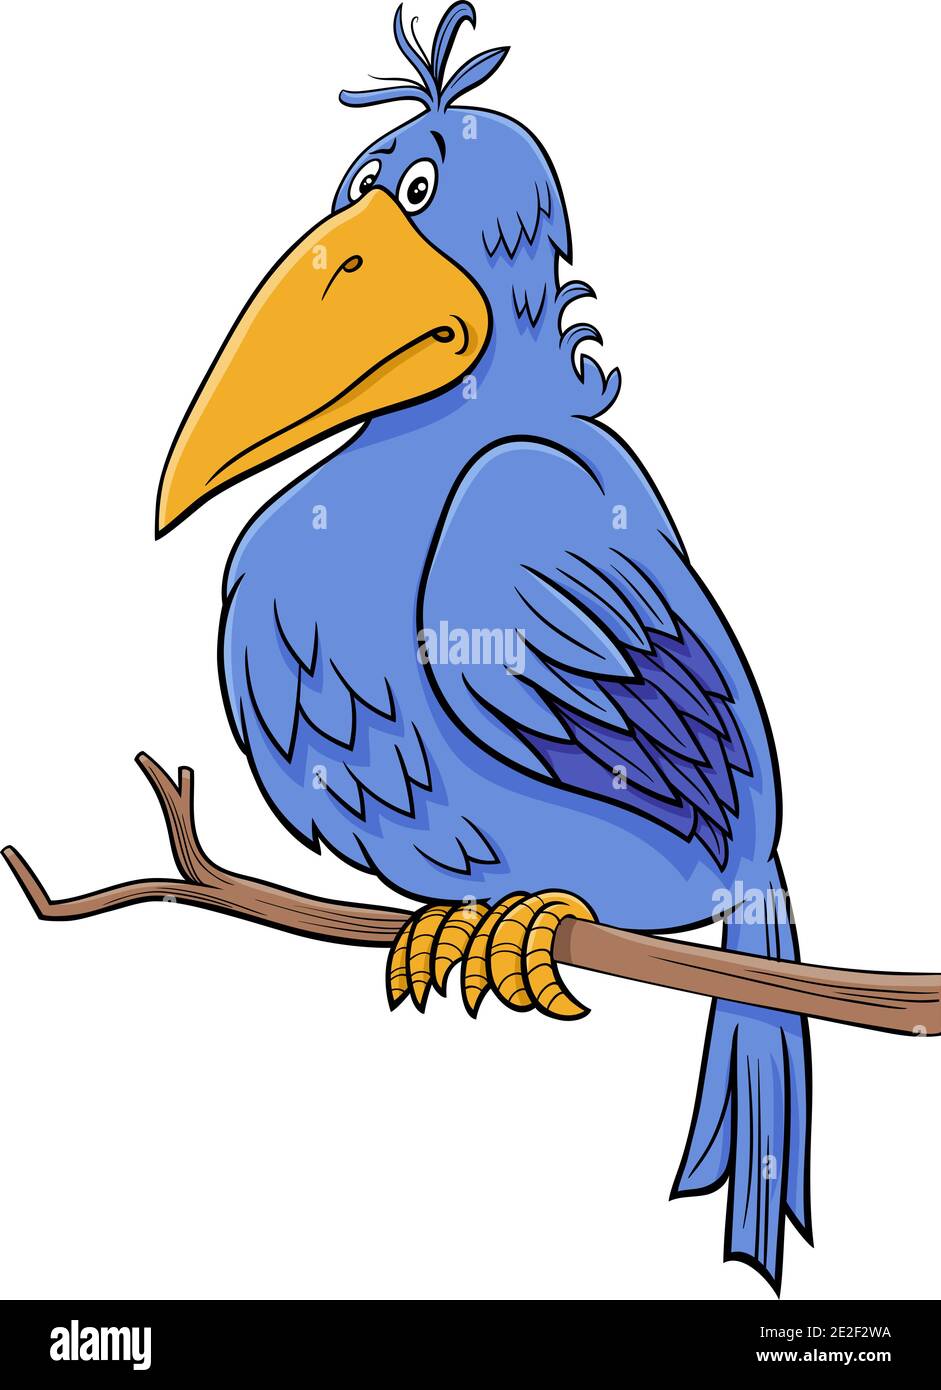 Cartoon illustration of fantasy blue bird comic animal character Stock Vector